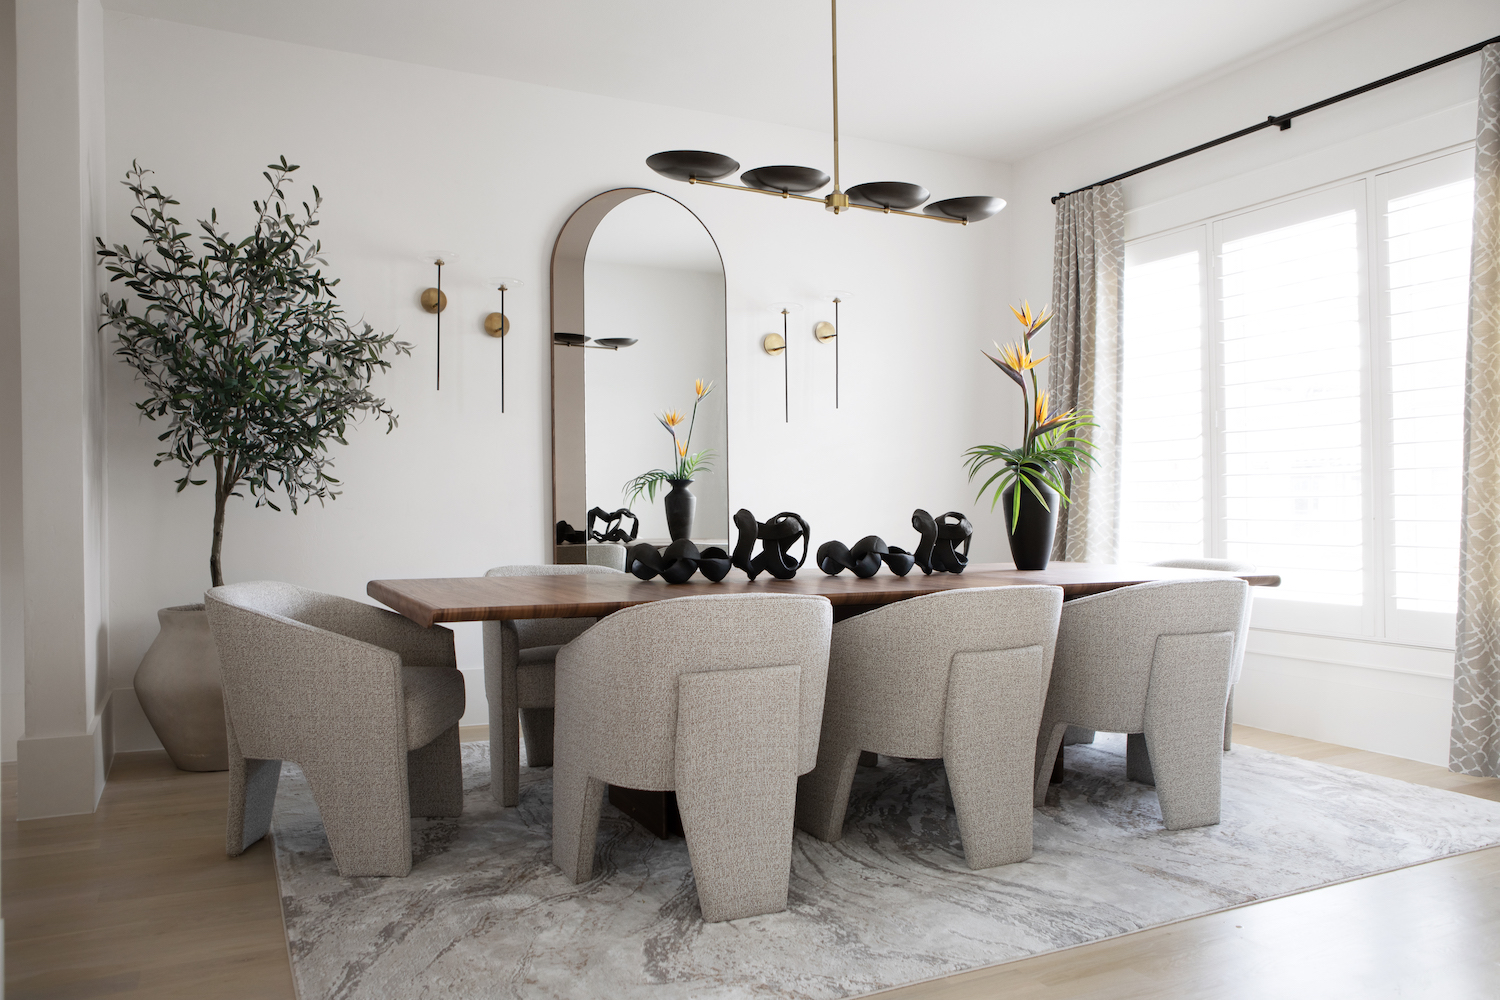 beyond-interior-design-dallas-tx-dining-room